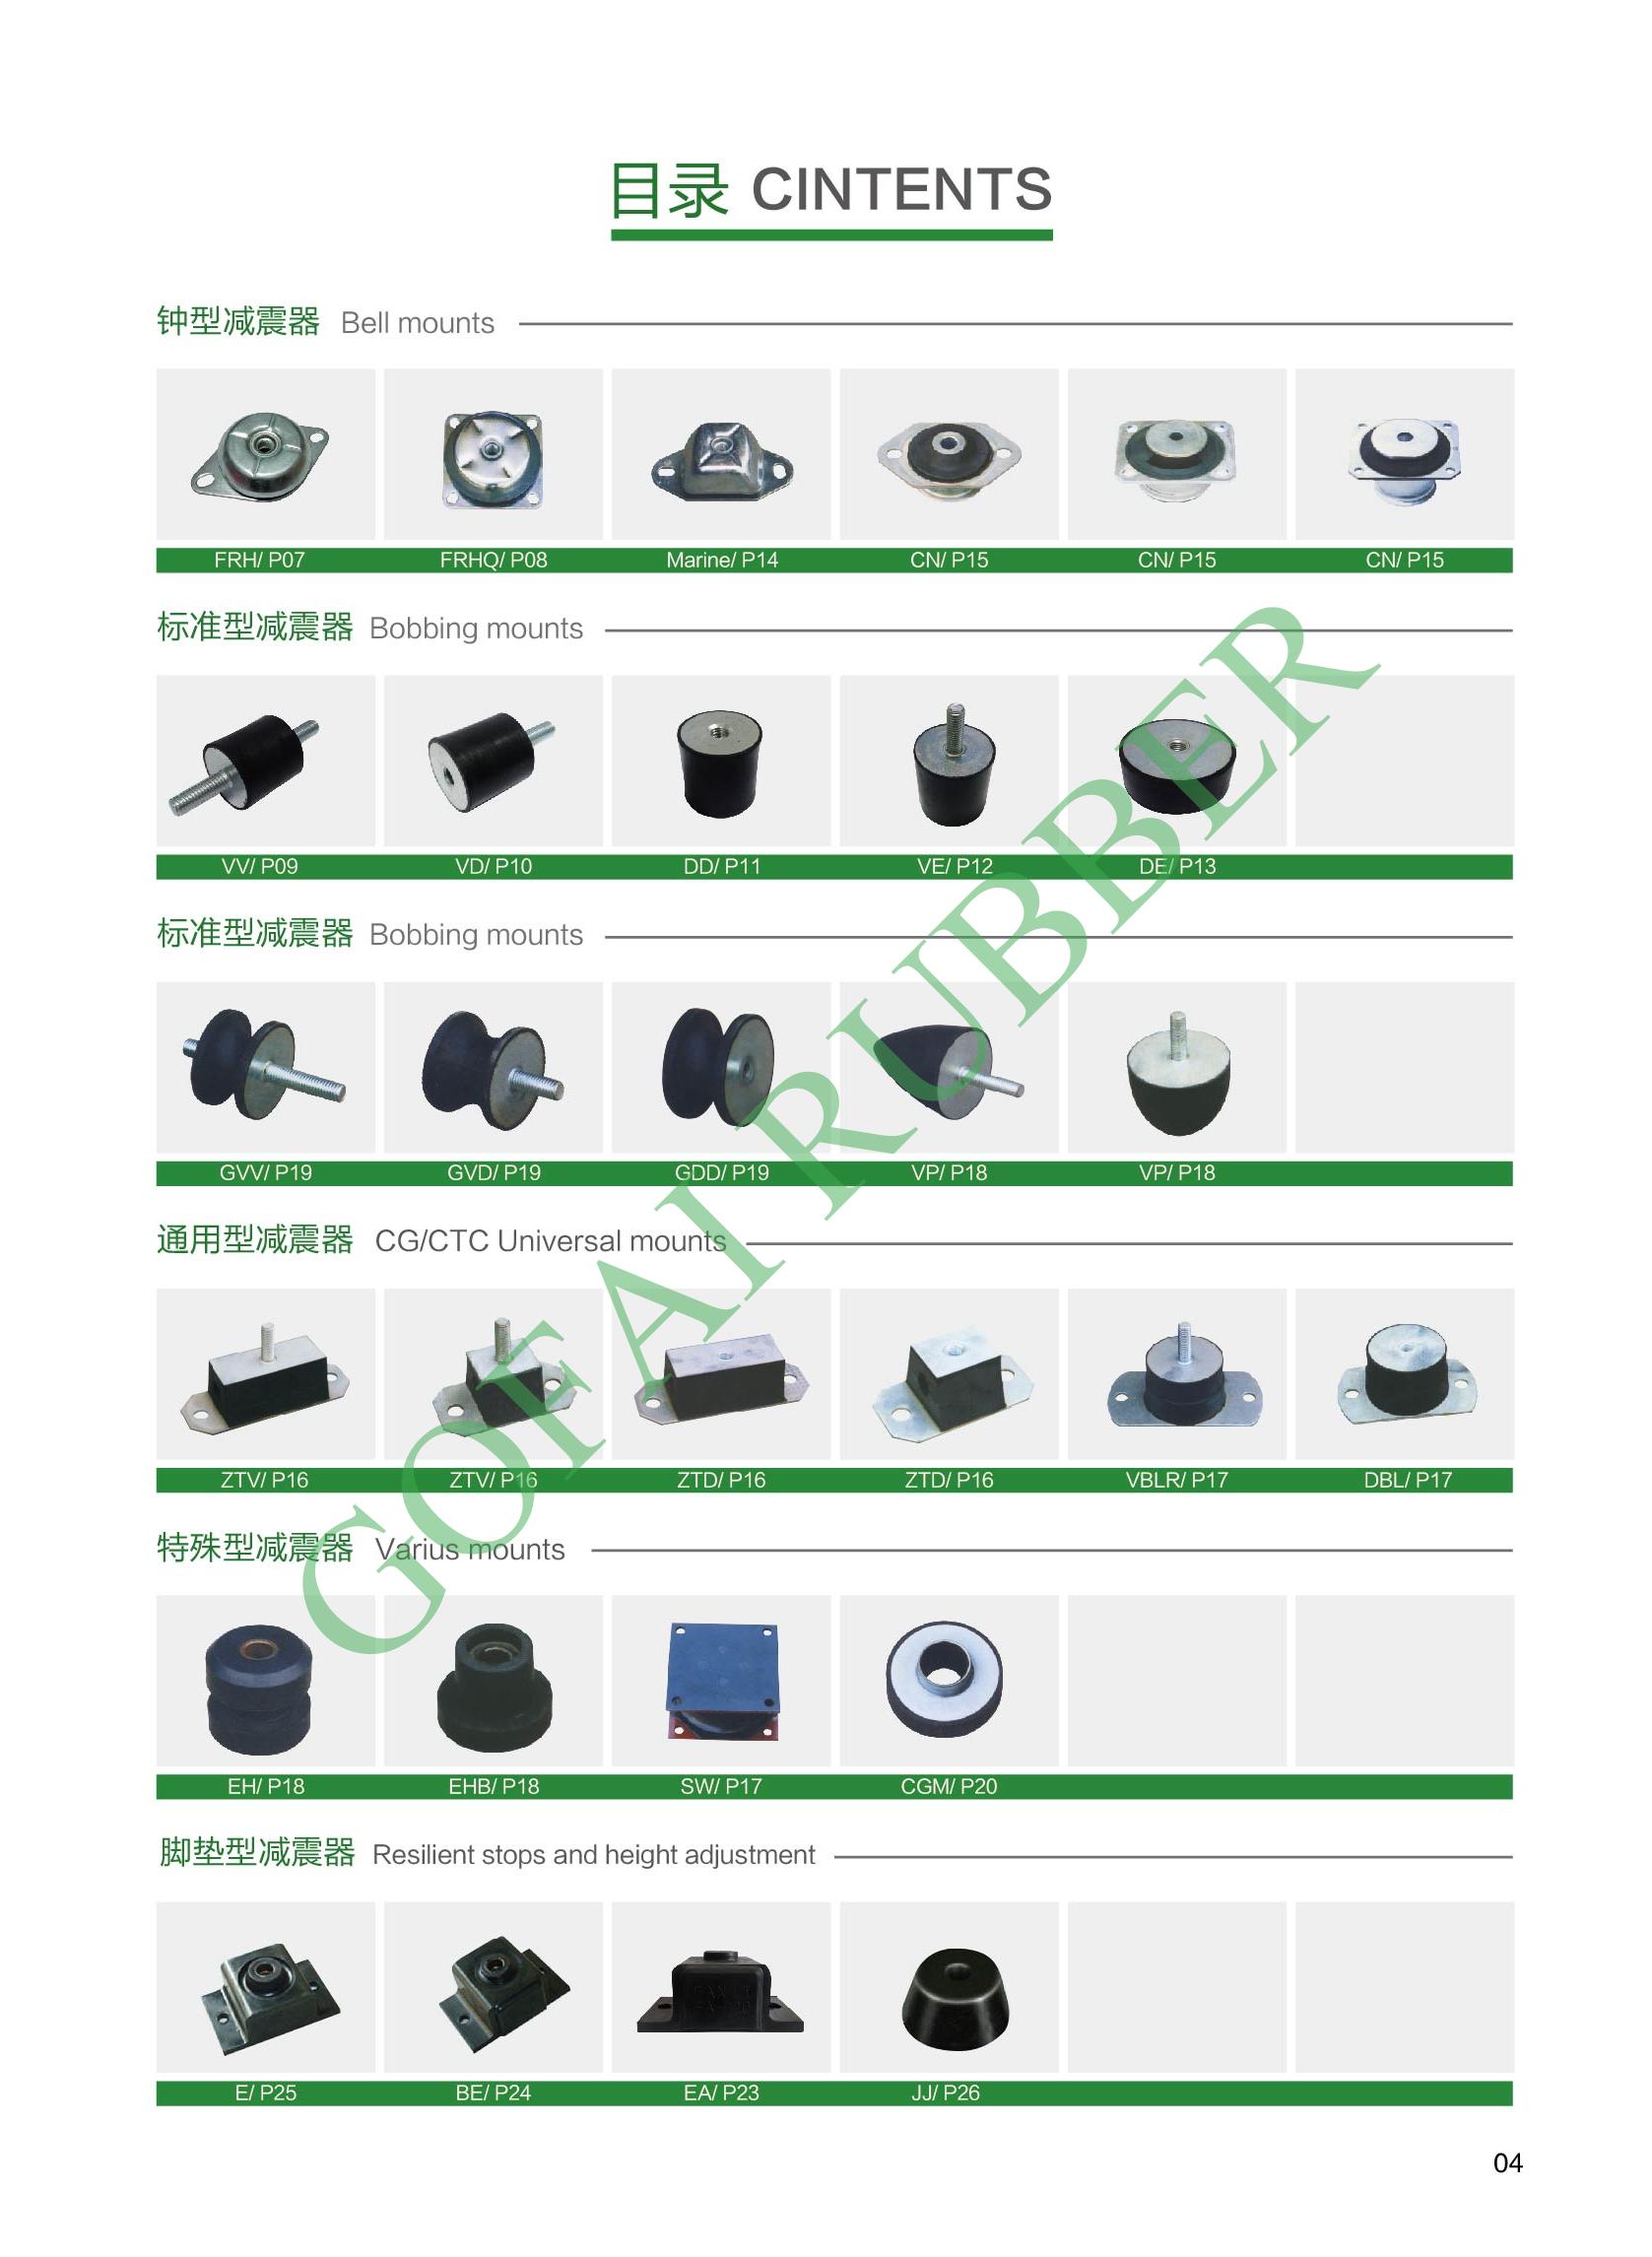 GOFAI catalog for rubber anti-vibration mounts_2.jpg